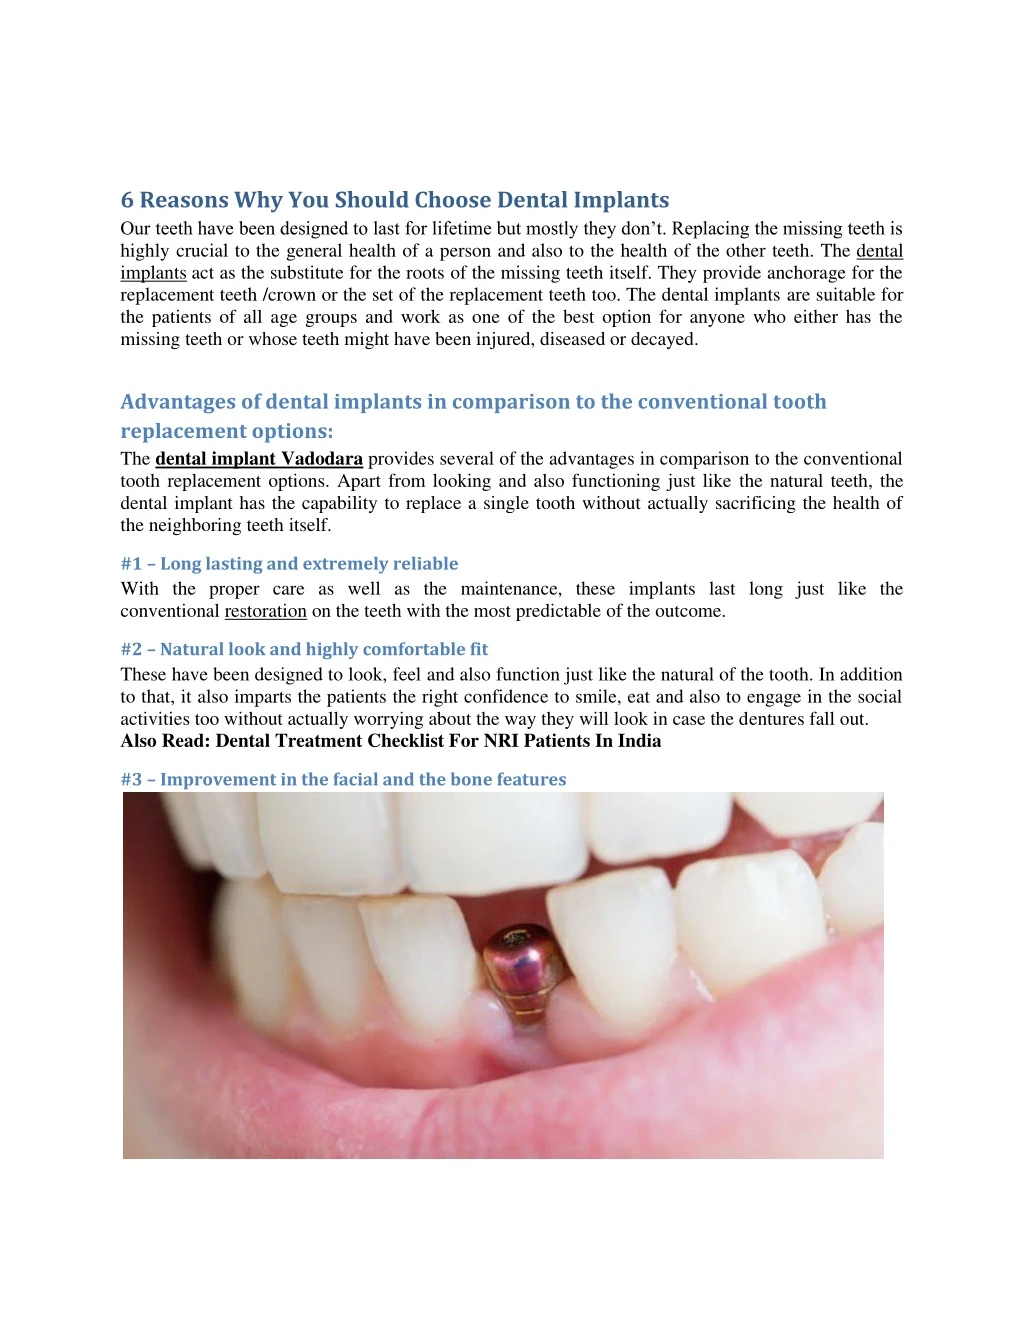 6 reasons why you should choose dental implants